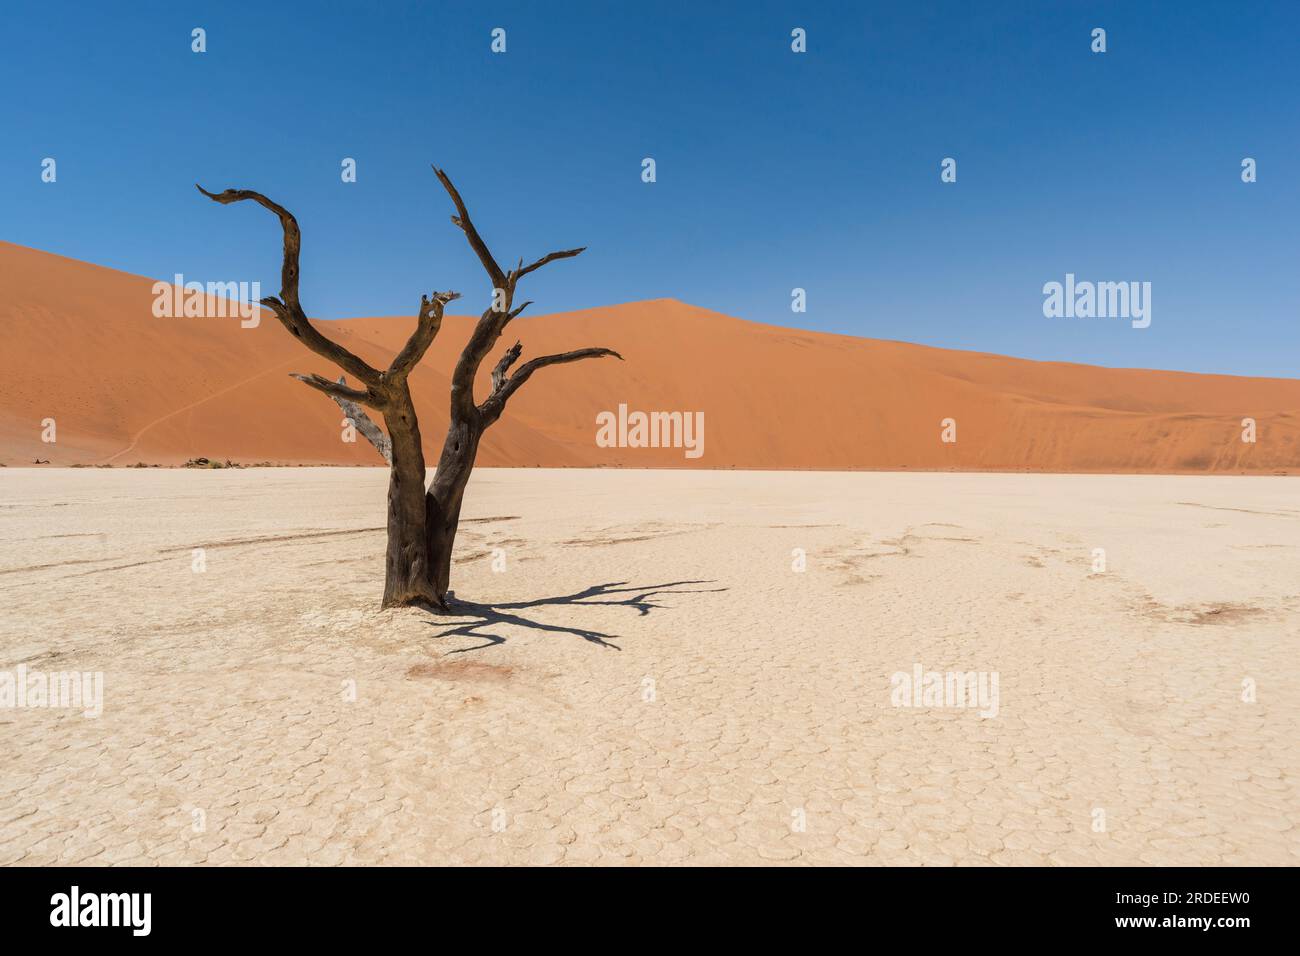 Toter Baum im berühmten Deadvlei-Tal mit roten Dünen Stockfoto